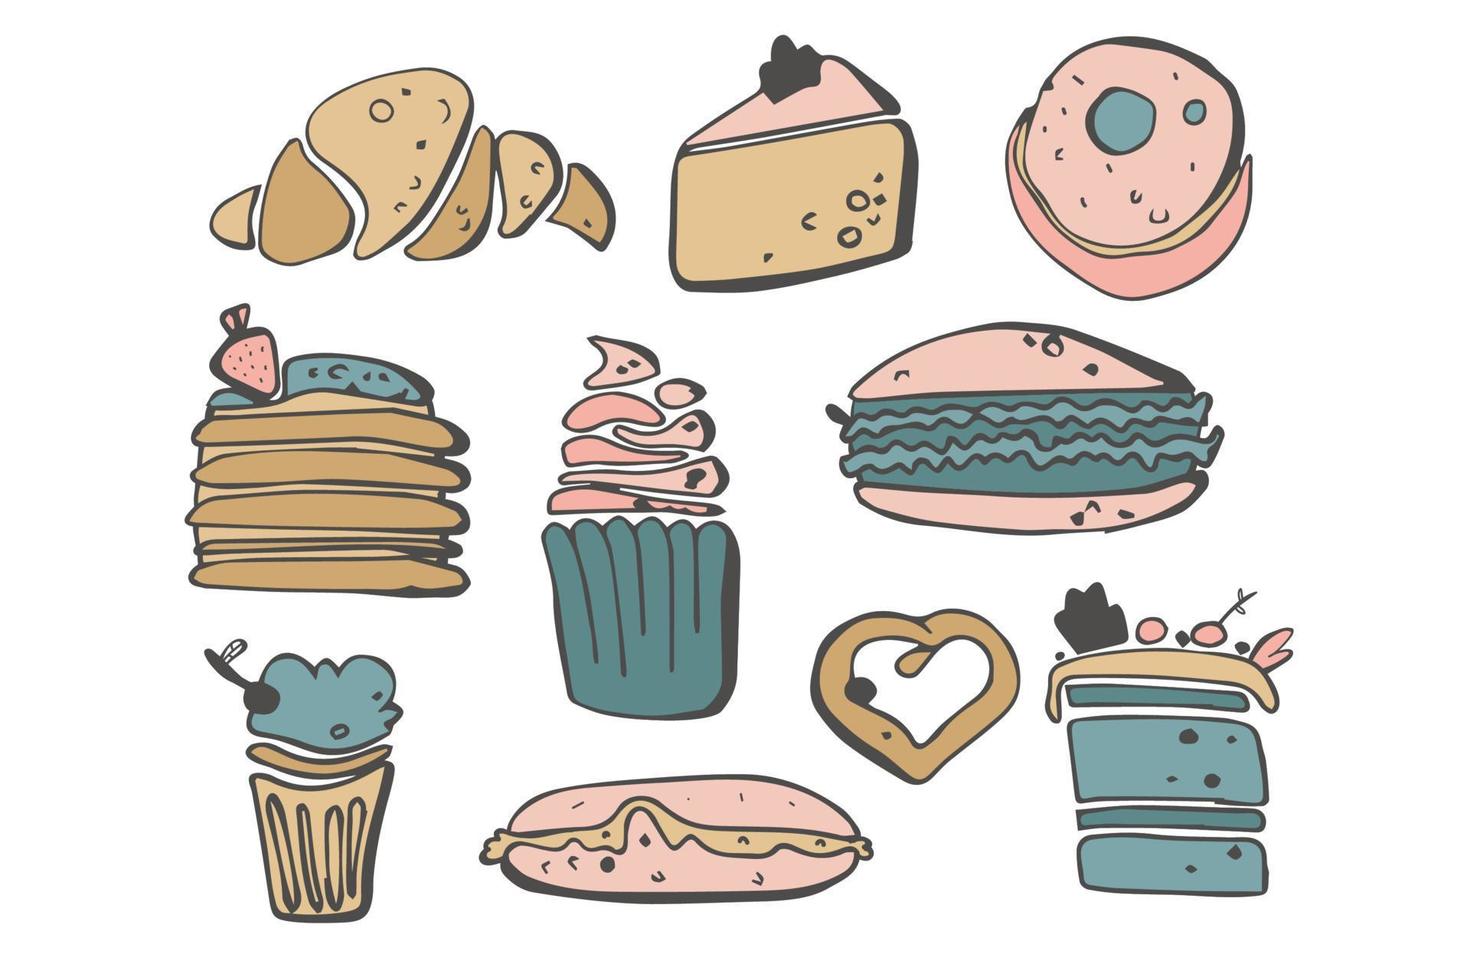 doodle sweets, dessert and candies set. Ice cream, cake, donut. Vector doodles. Vector sketch illustration. Dessert menu, hand drawn elements.